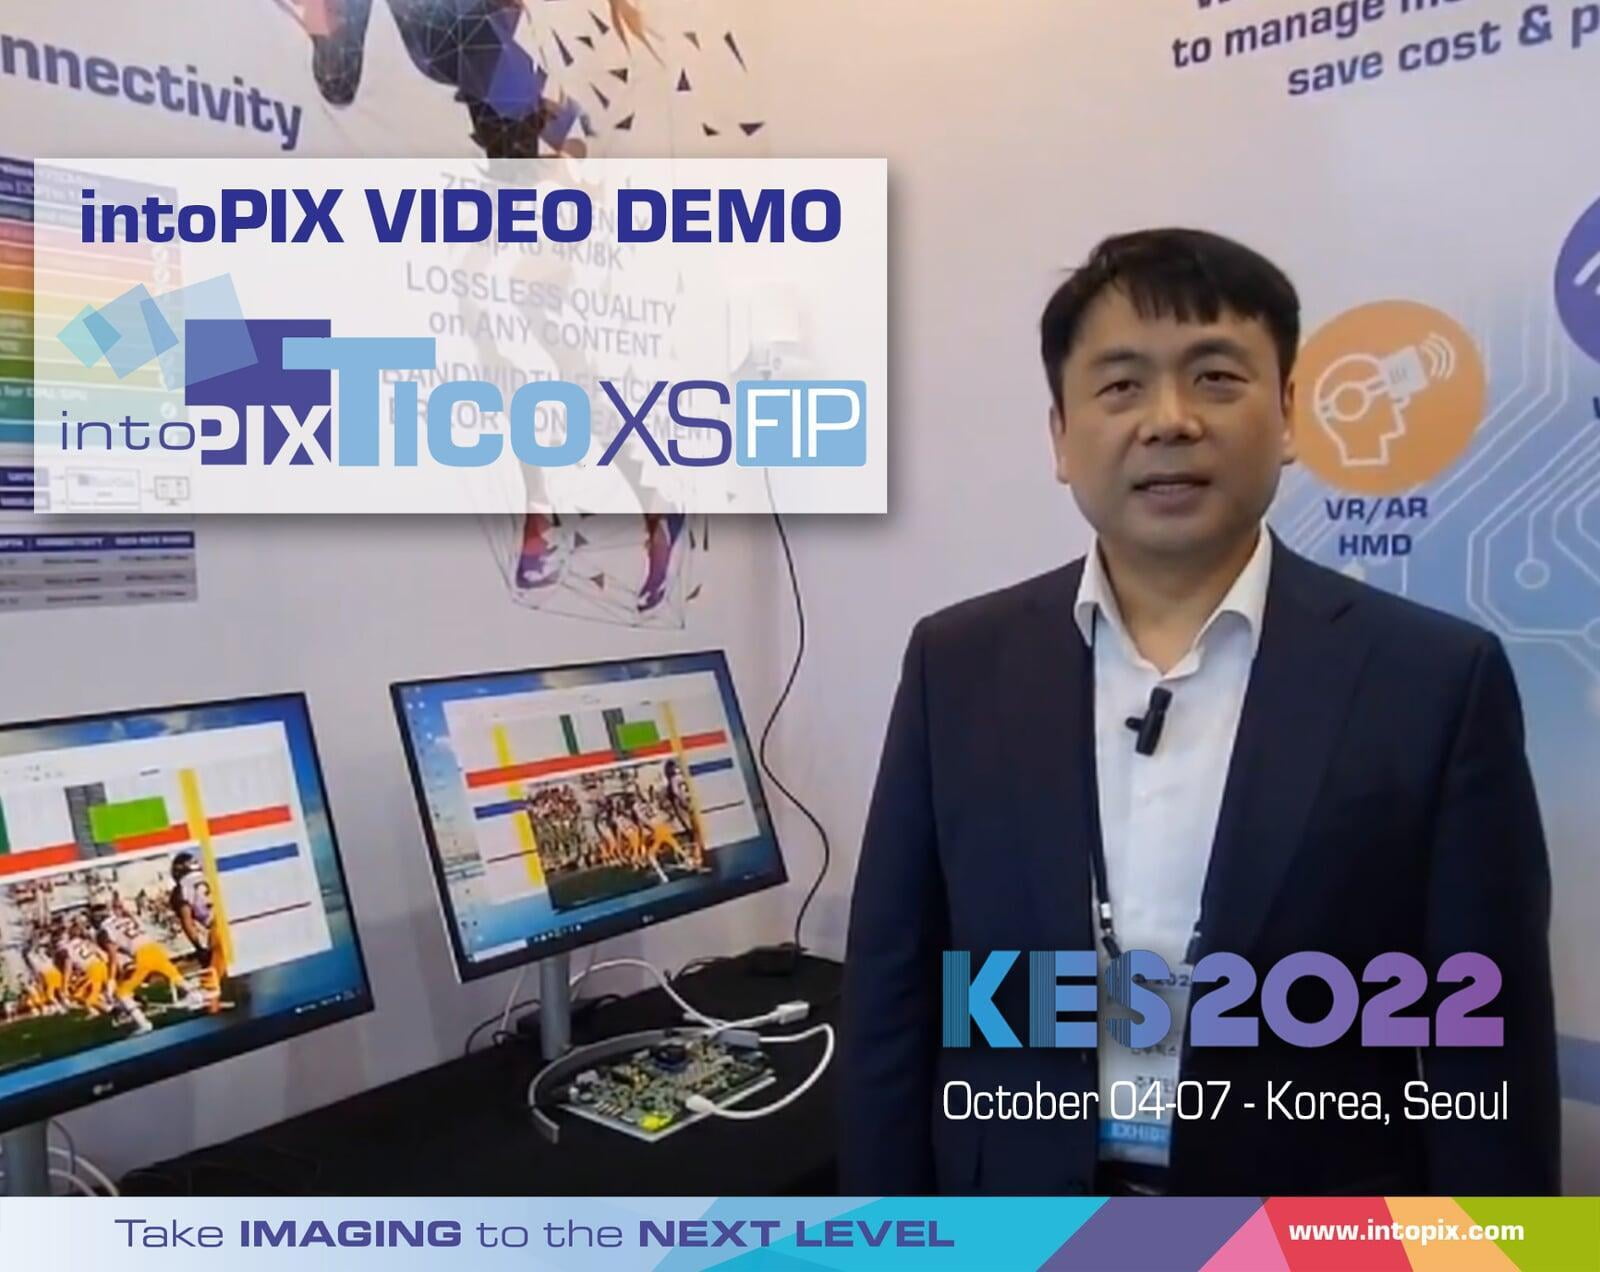 KES2022の韓国語ビデオ・デモ ：ワイヤレス伝送のための新しいintoPIXのTicoXS FIPのプレゼンテーション